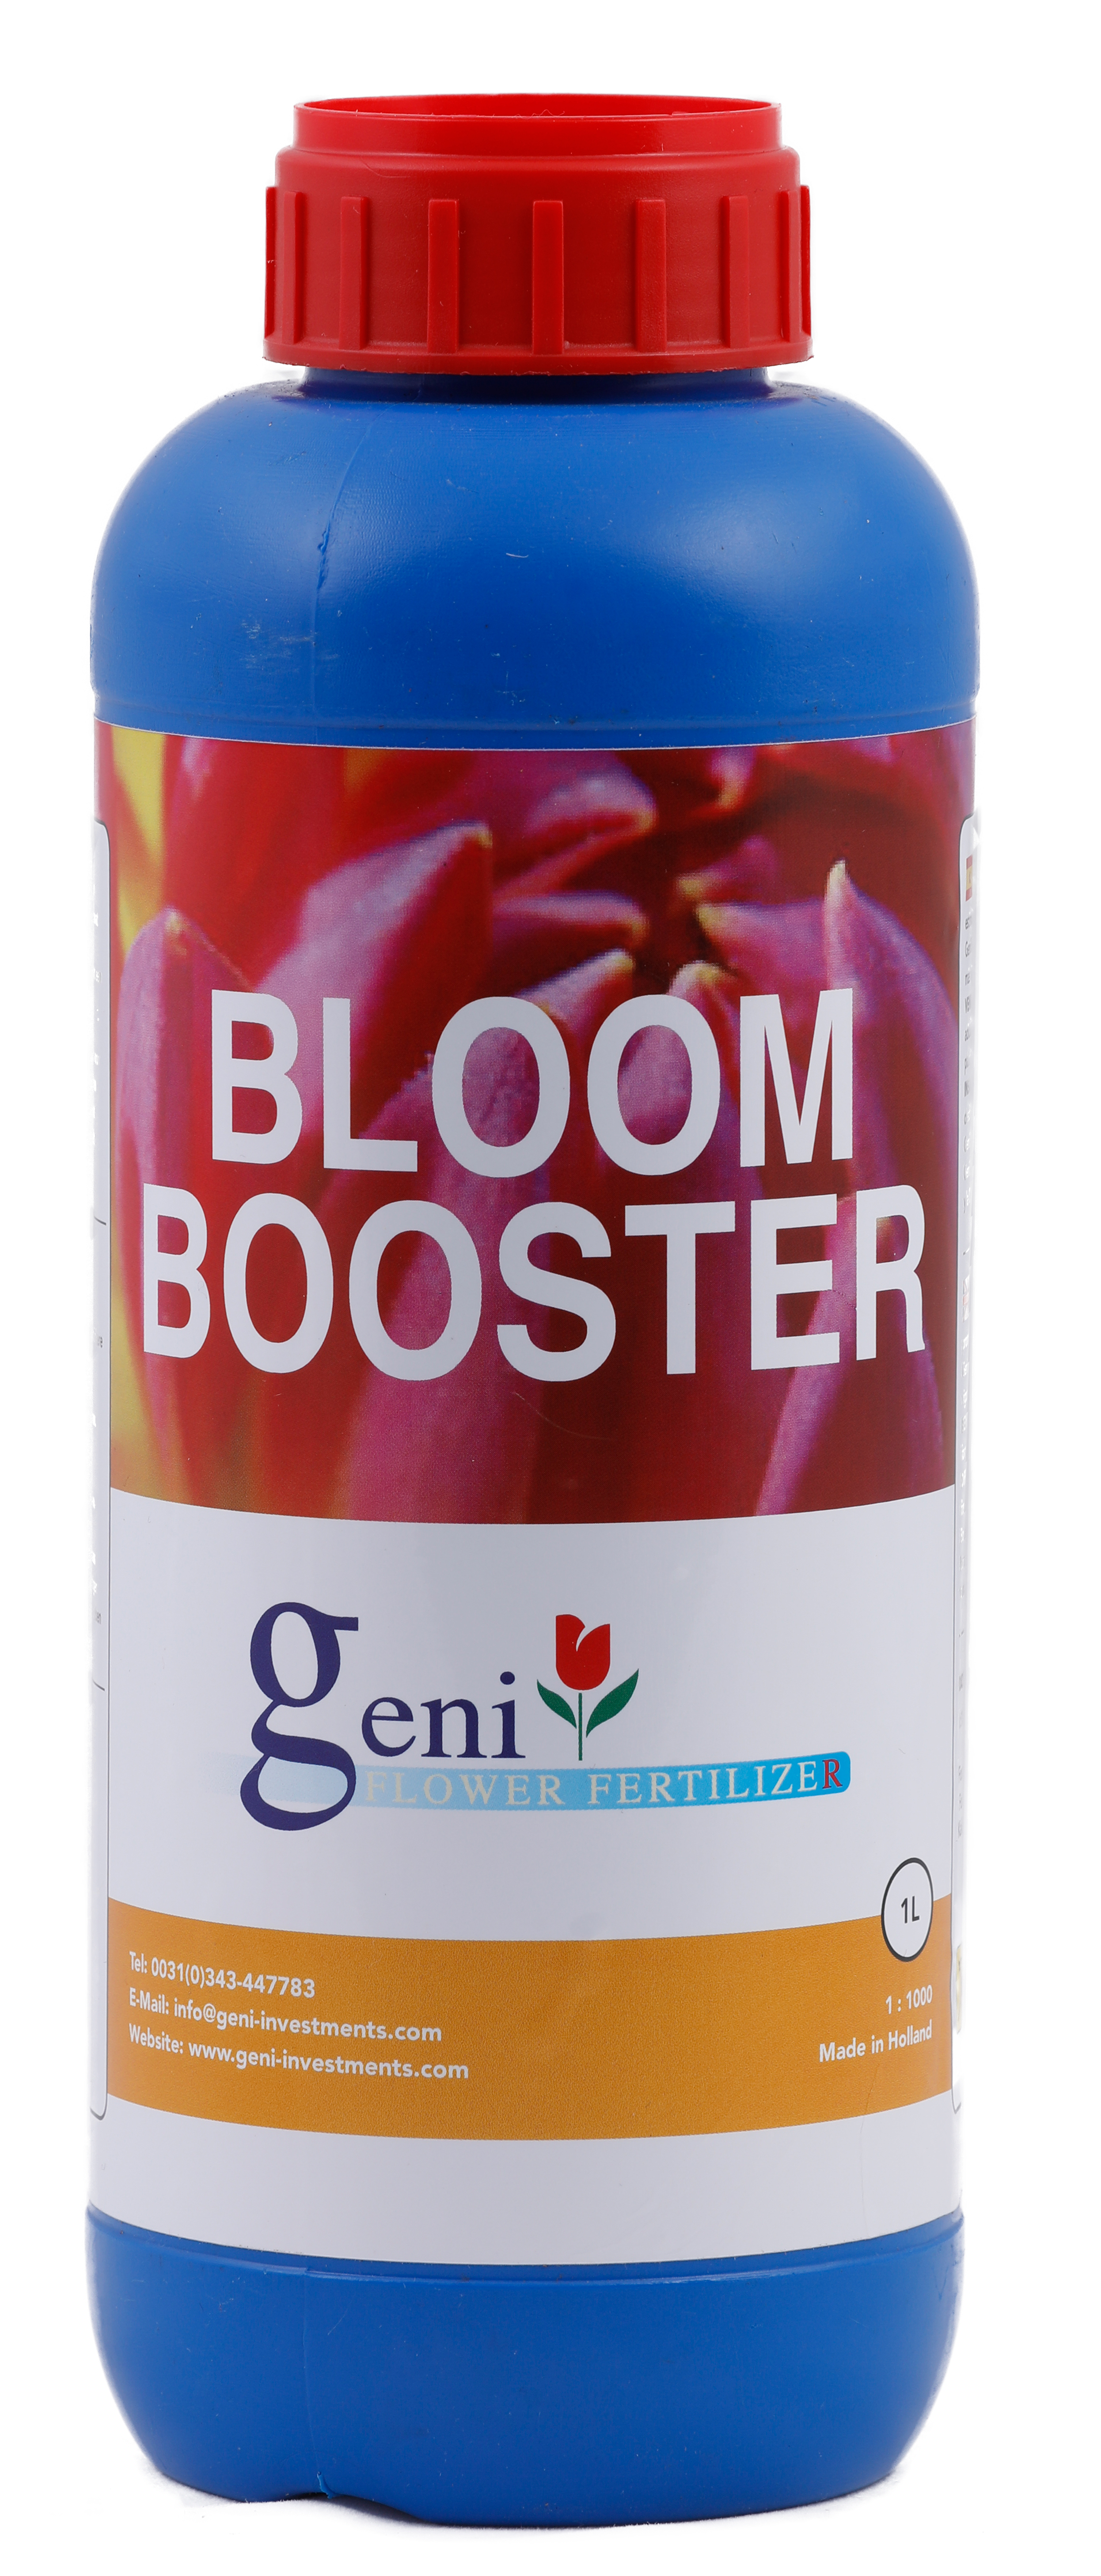 Geni Bloom Booster